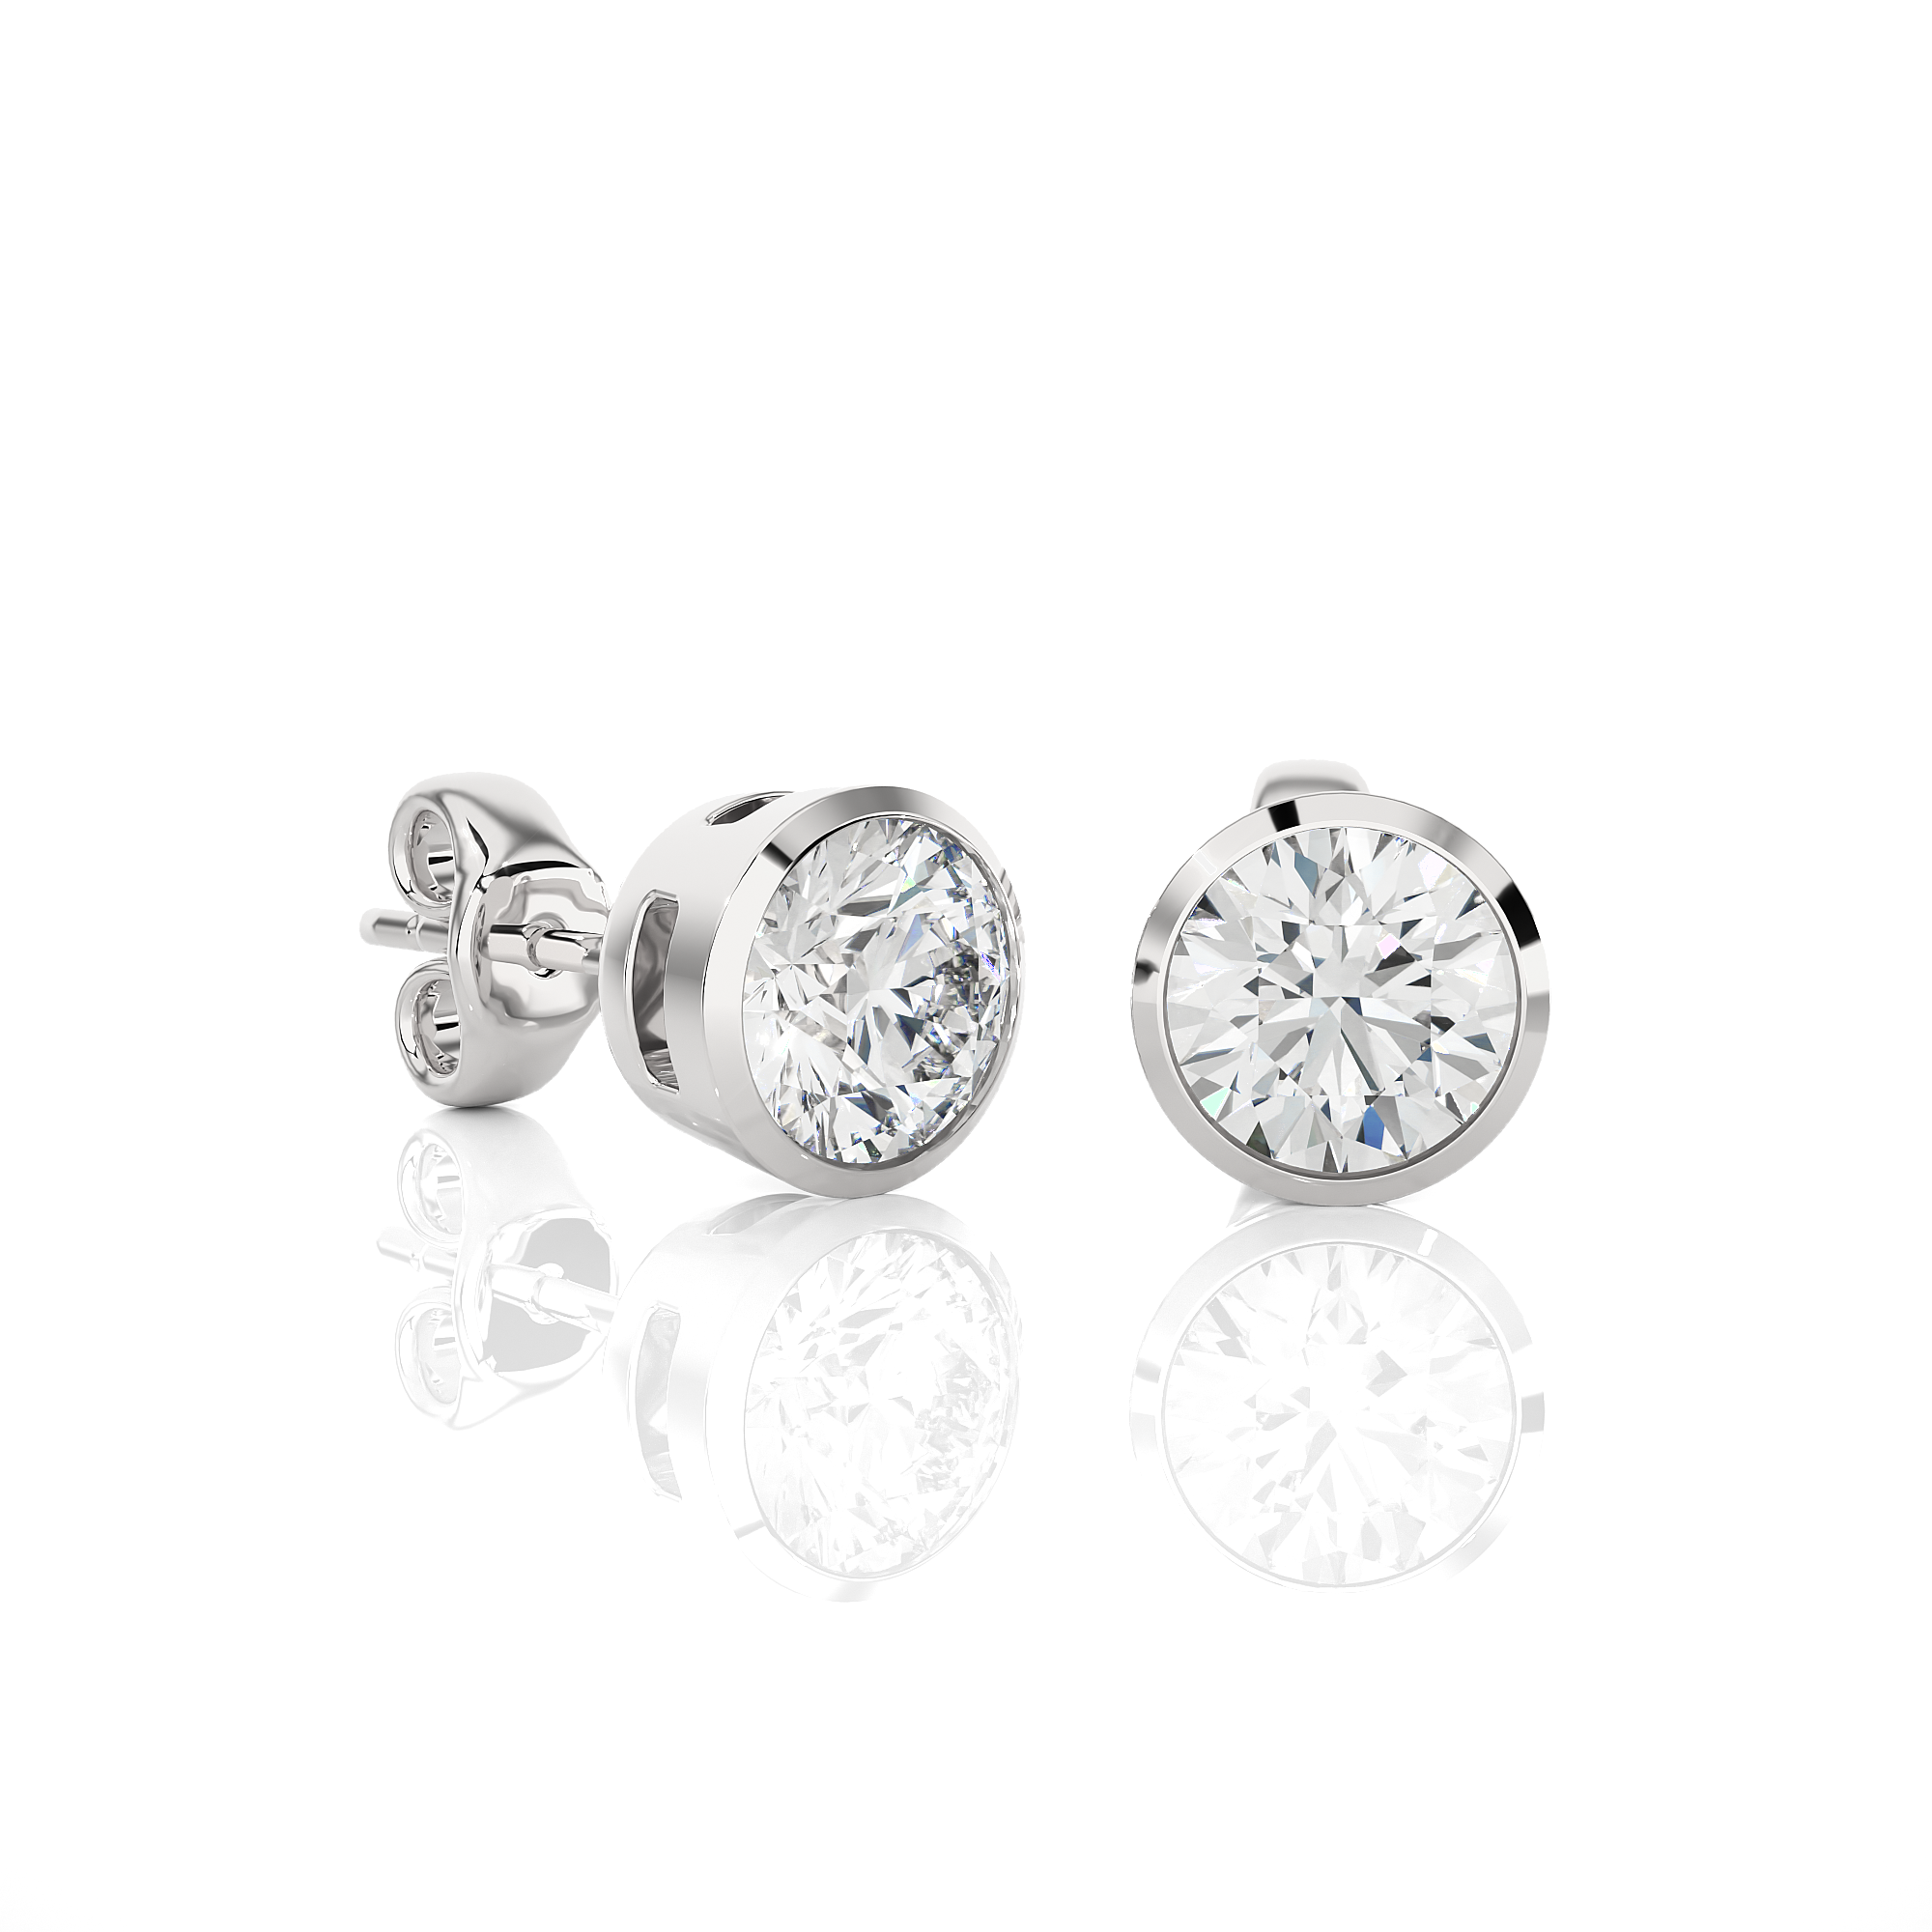 1.18 Ct Round Shaped Diamond Stud Earrings in 14Kt White Gold  - Blu Diamonds